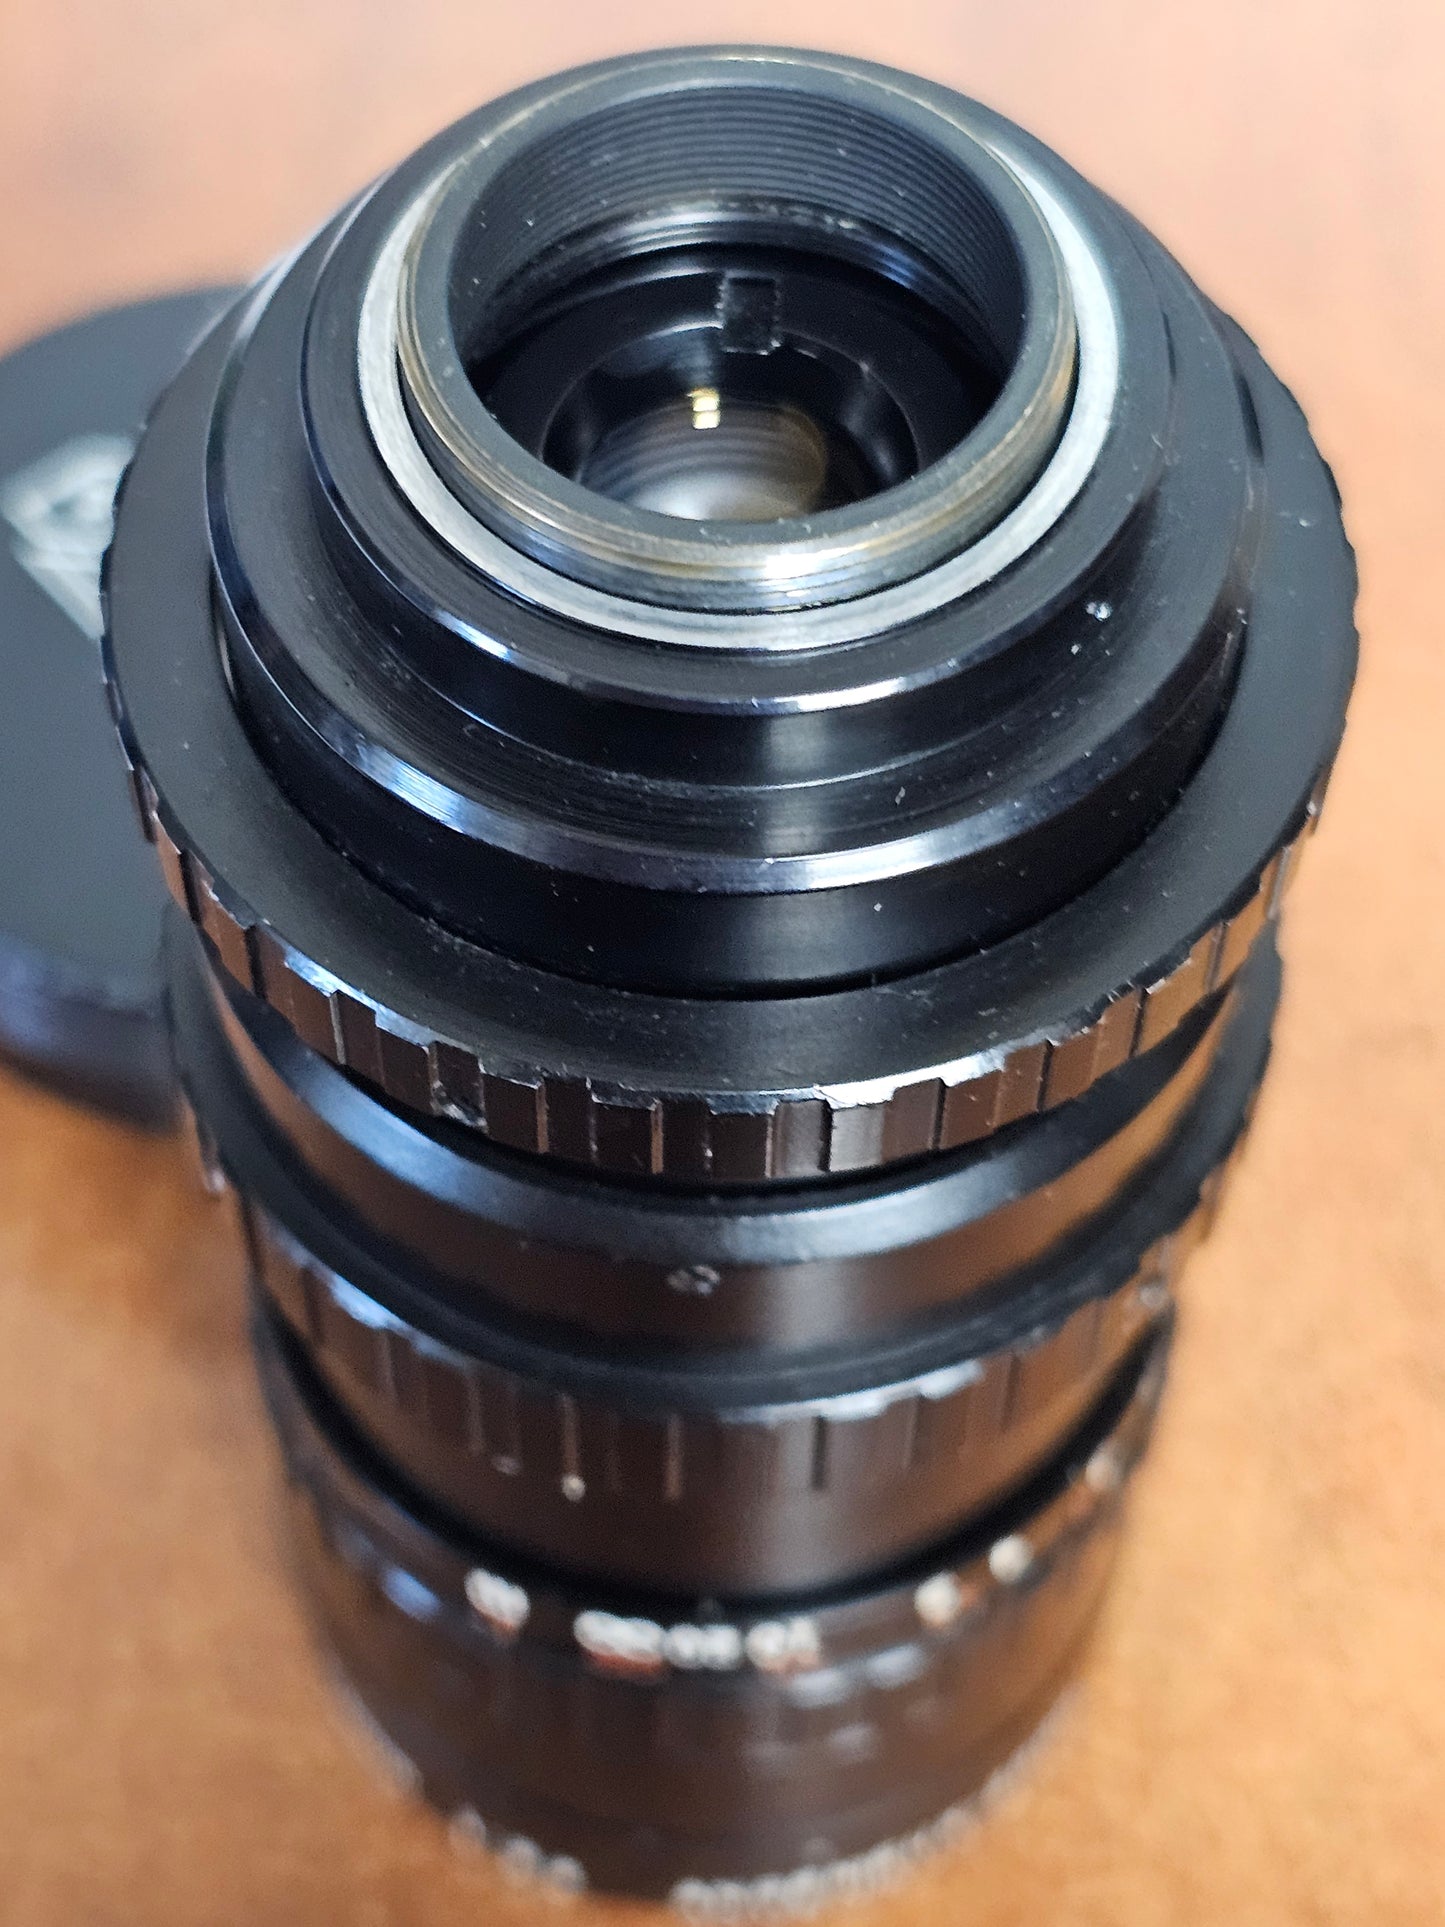 Angenieux 17-68mm f2.2/T2.7 C-Mount Zoom lens Type 4x17B (Black Version) S# 1233607